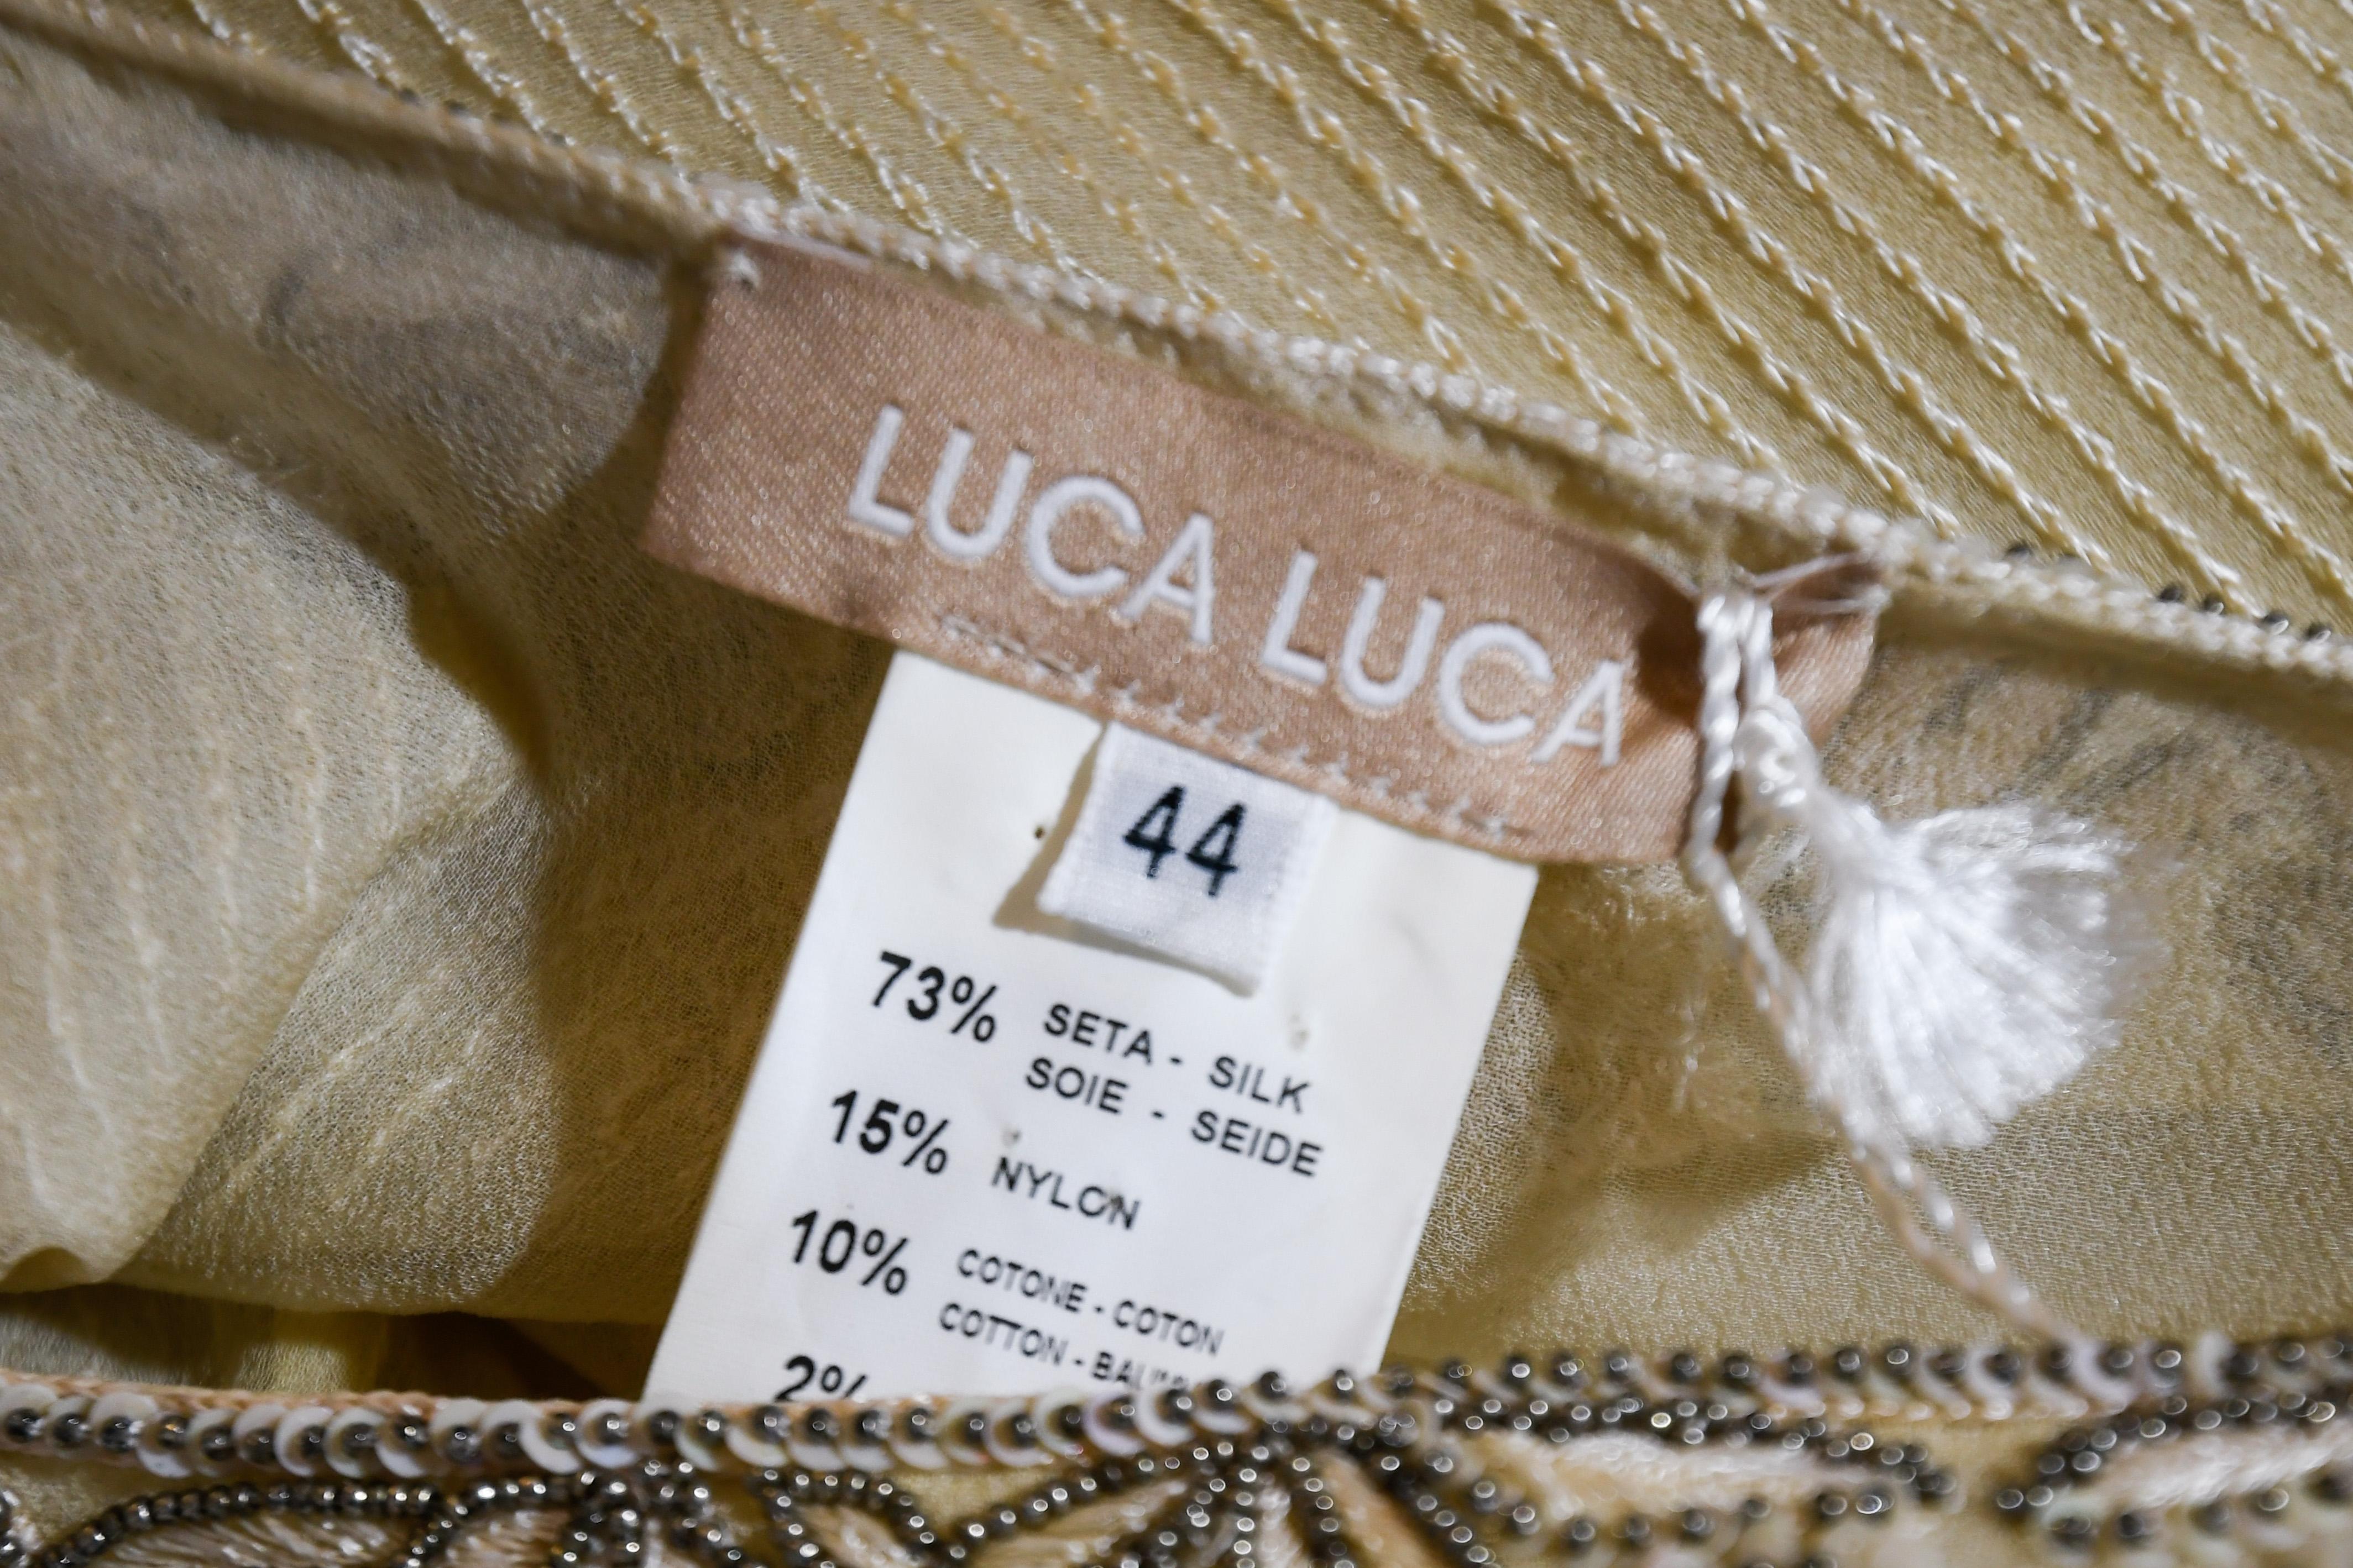 Beige Luca Luca Dusty Rose 2 pc. Pant Suit  For Sale